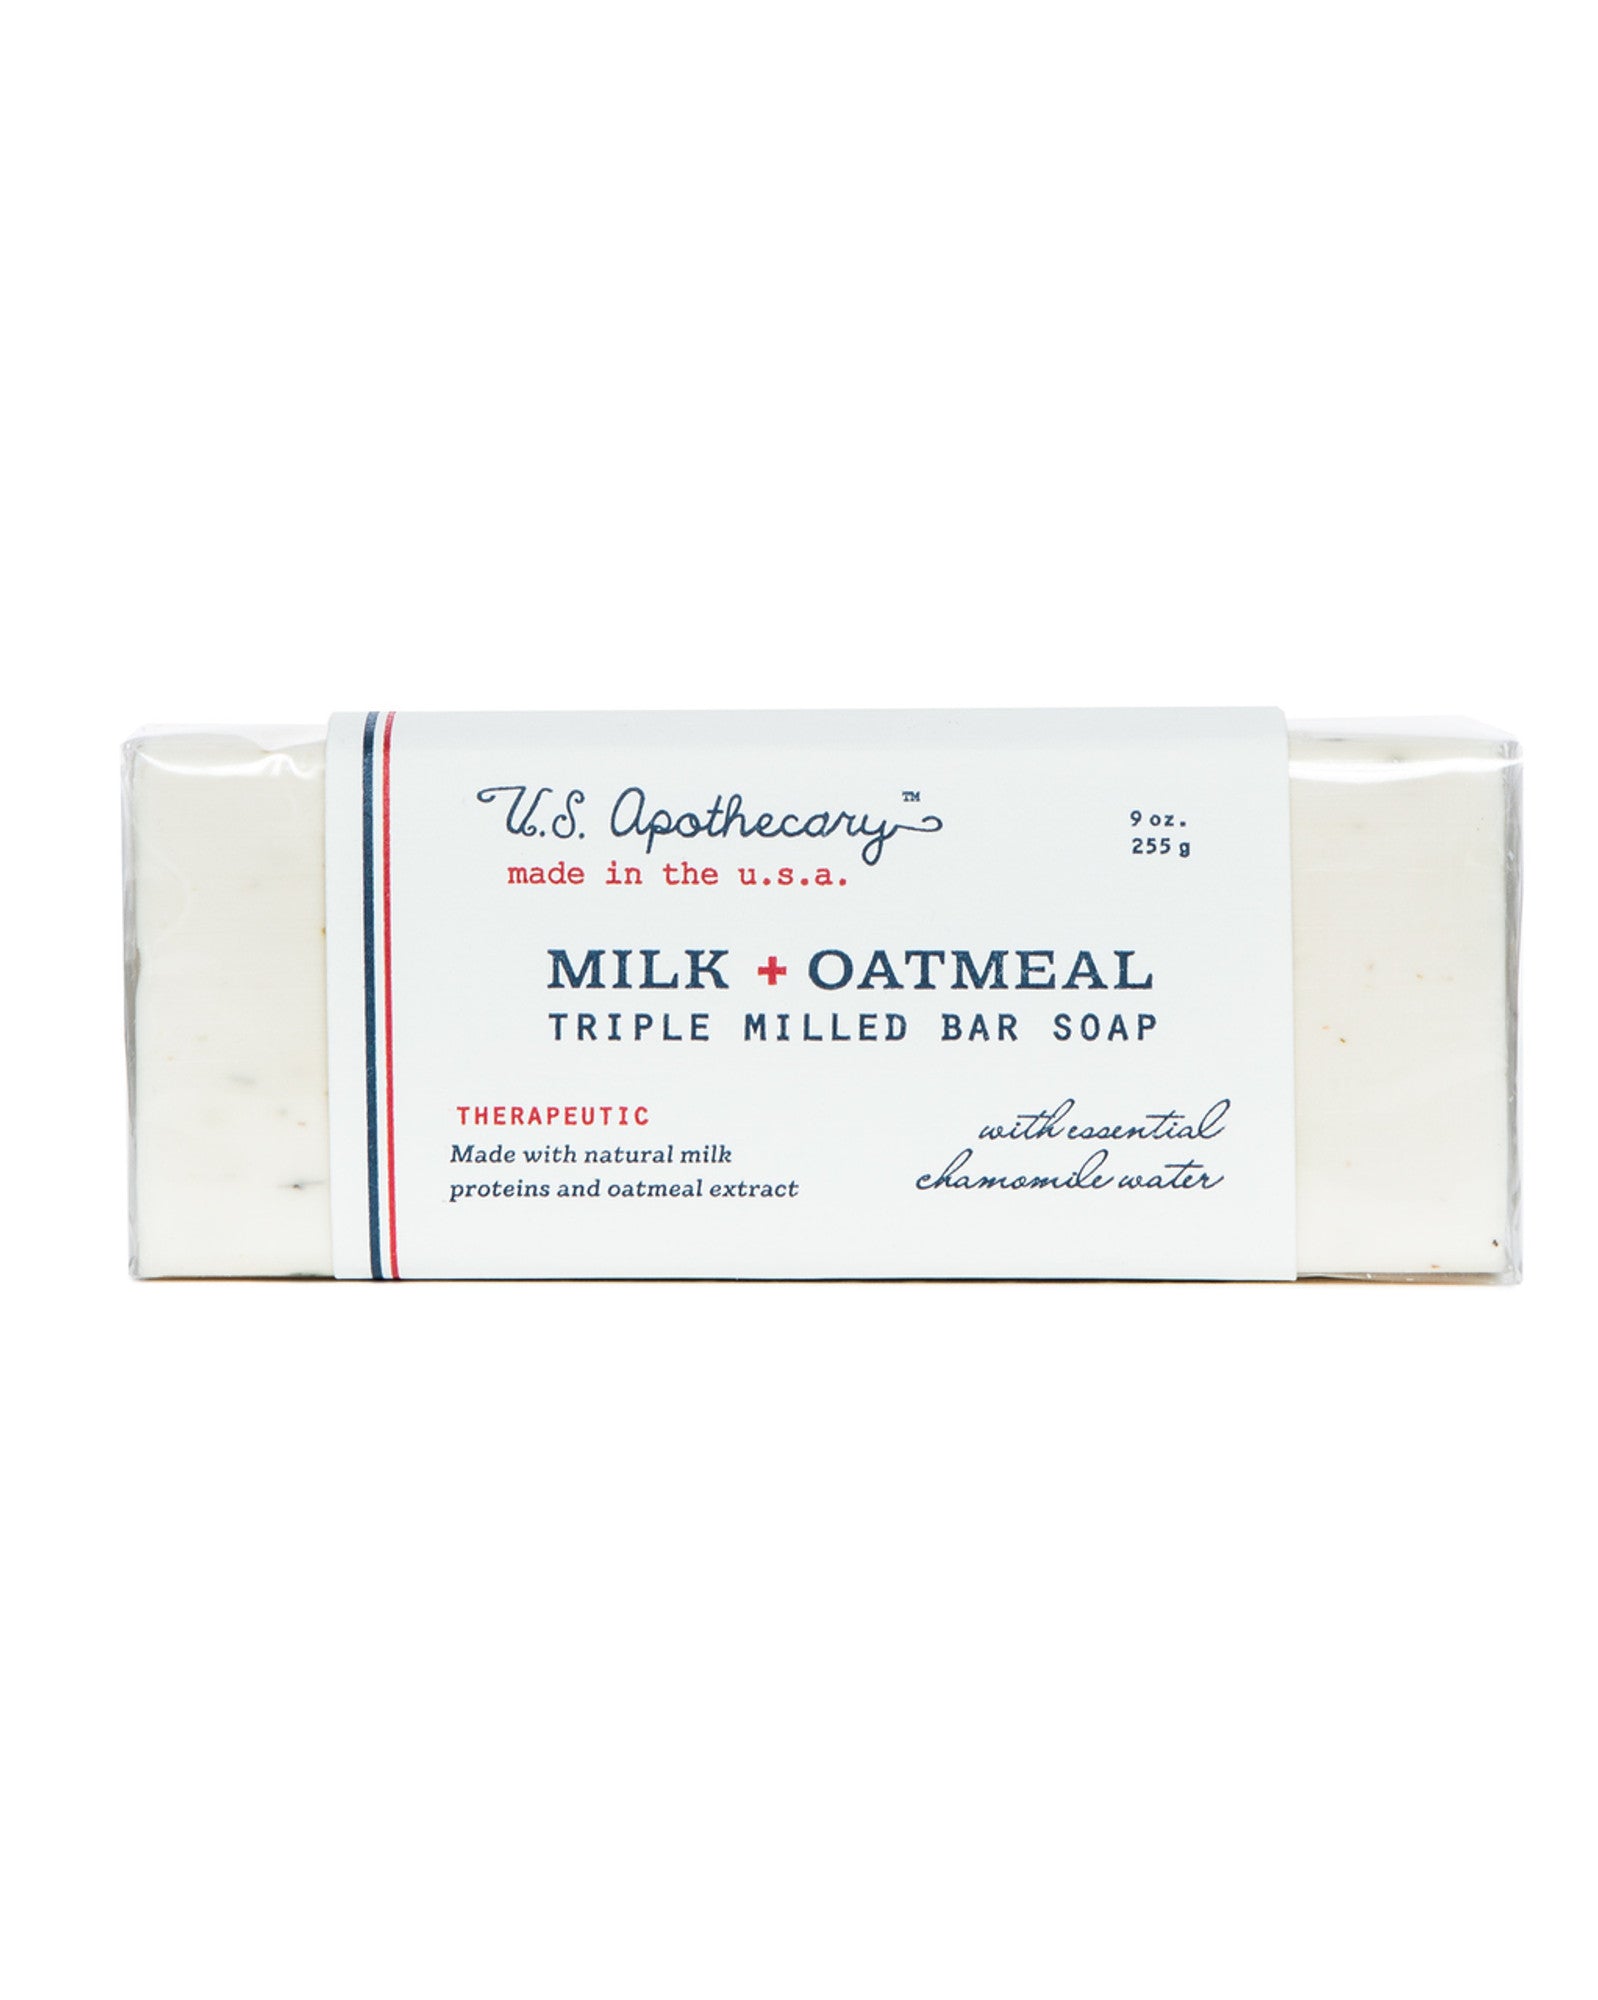 9oz Bar Soap - Milk + Oatmeal